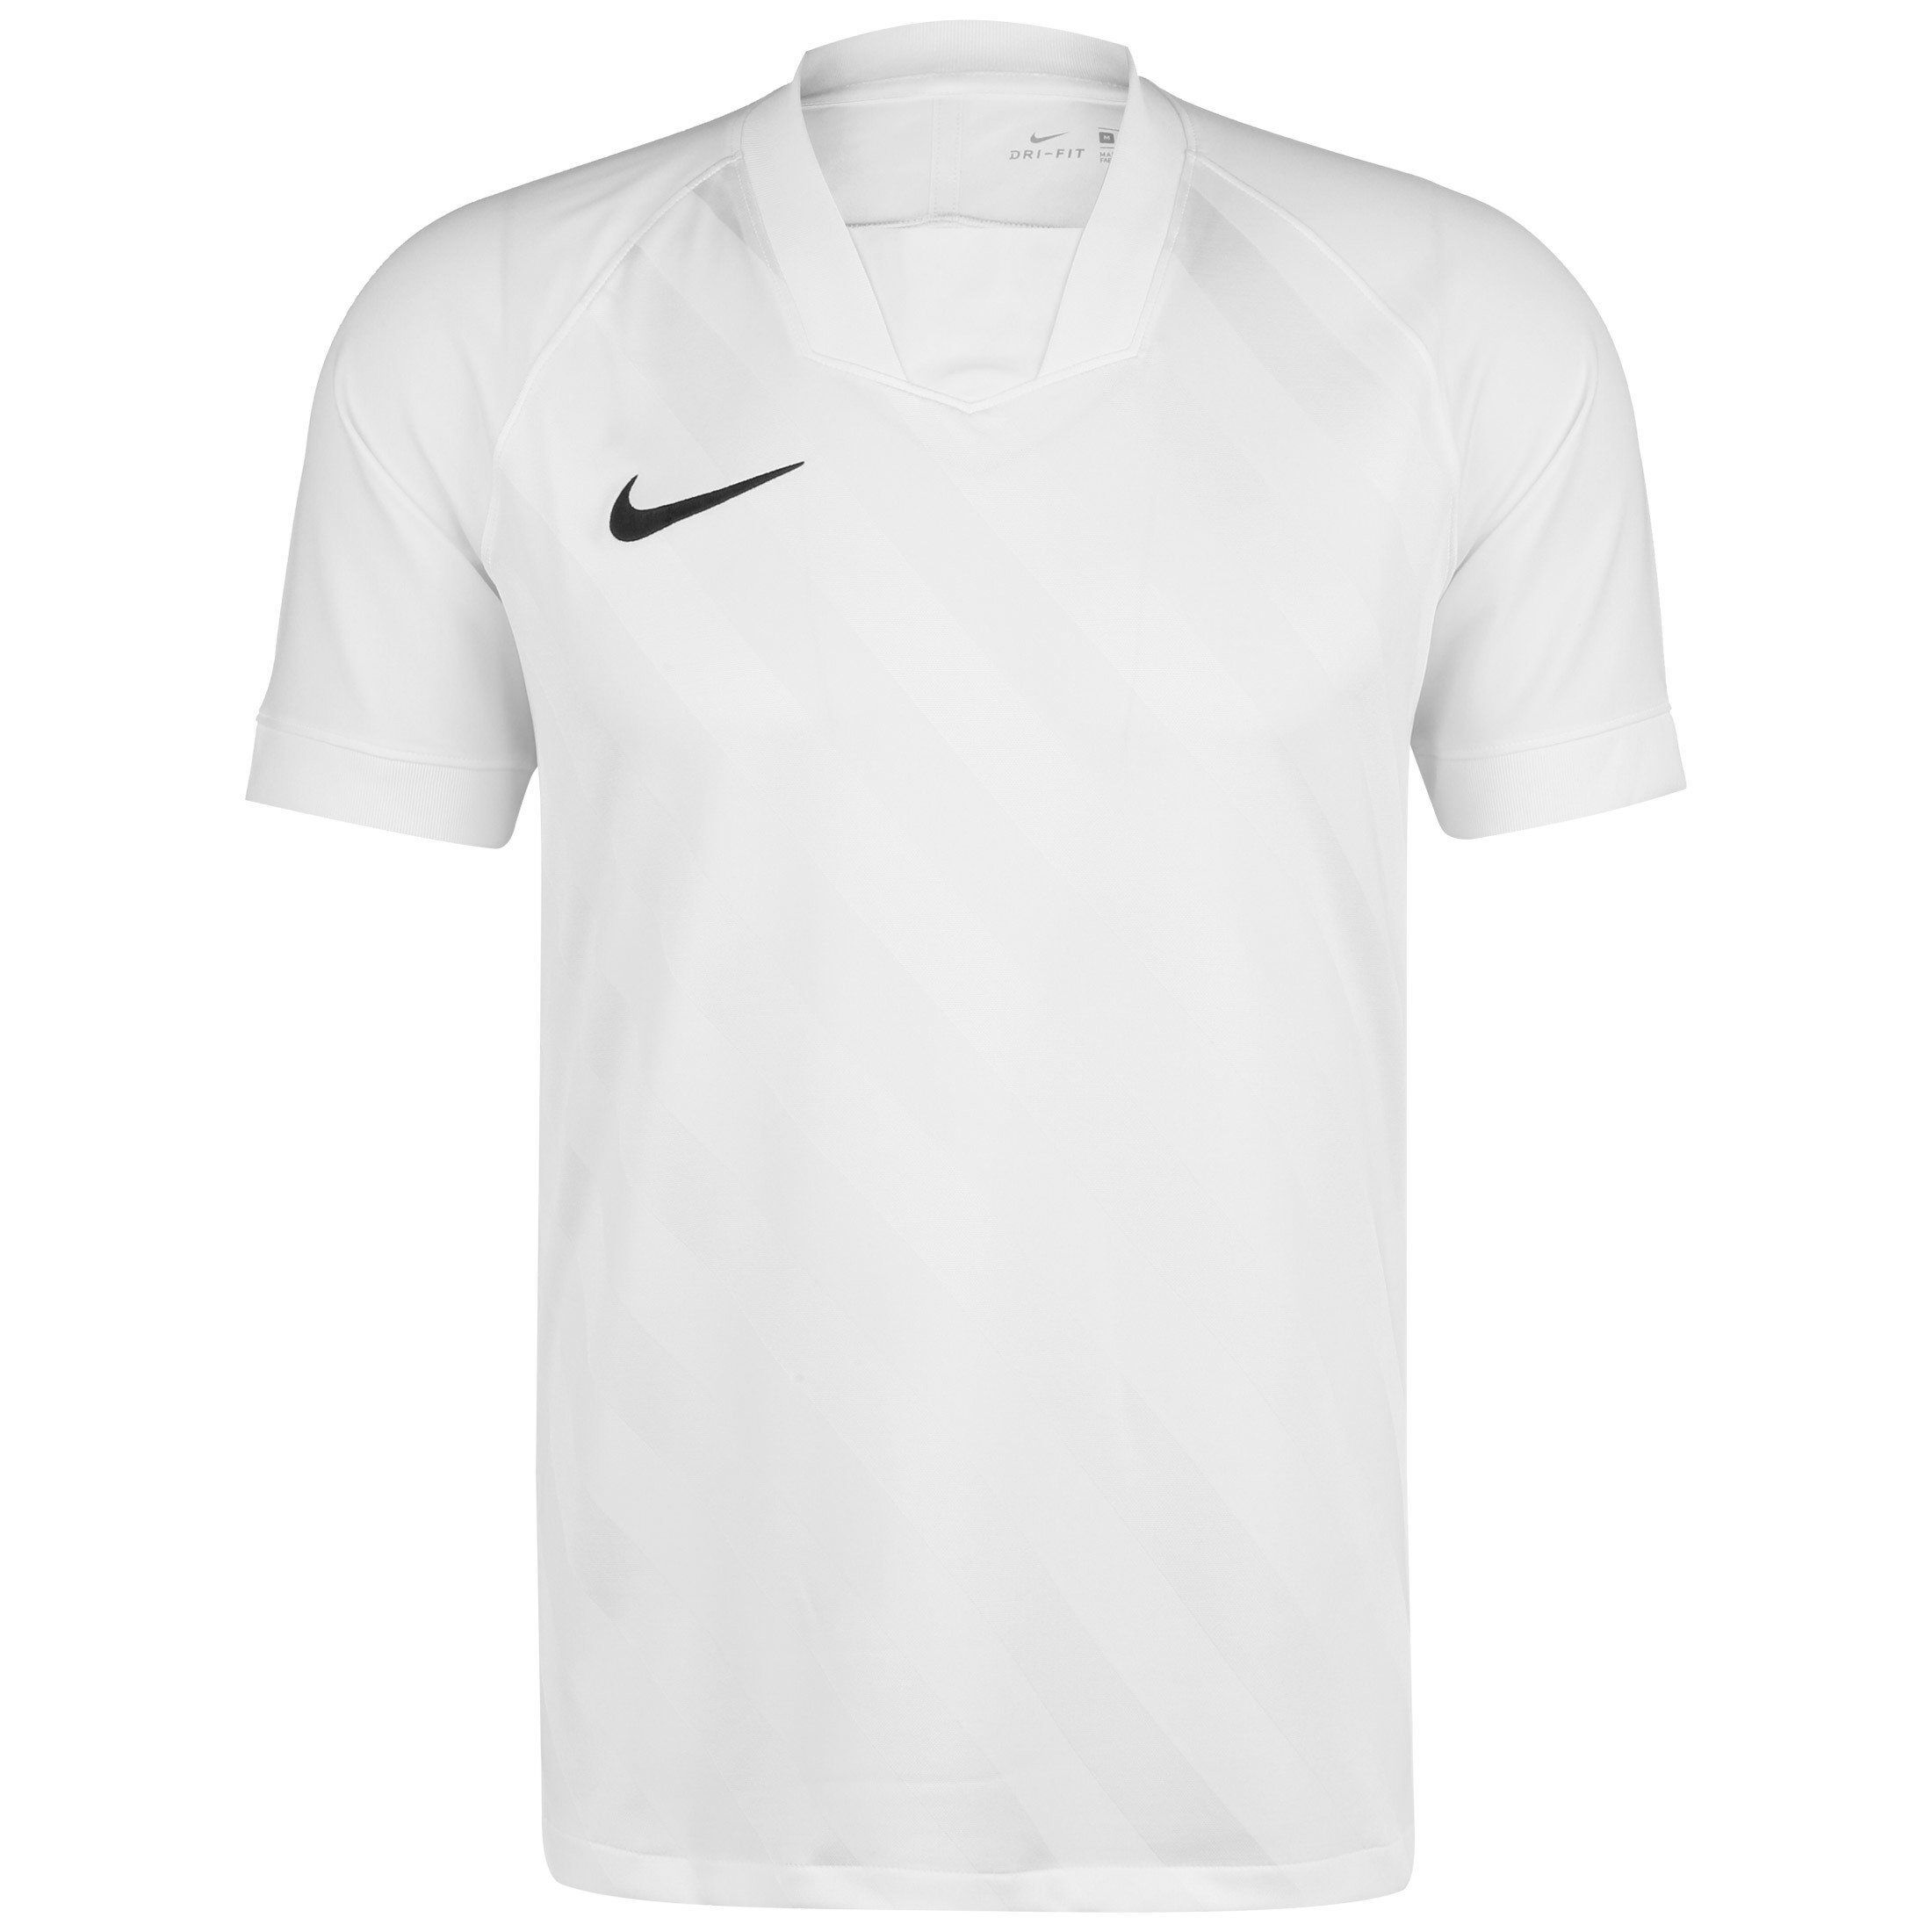 Nike Fußballtrikot »Challenge Iii«, white / white / black